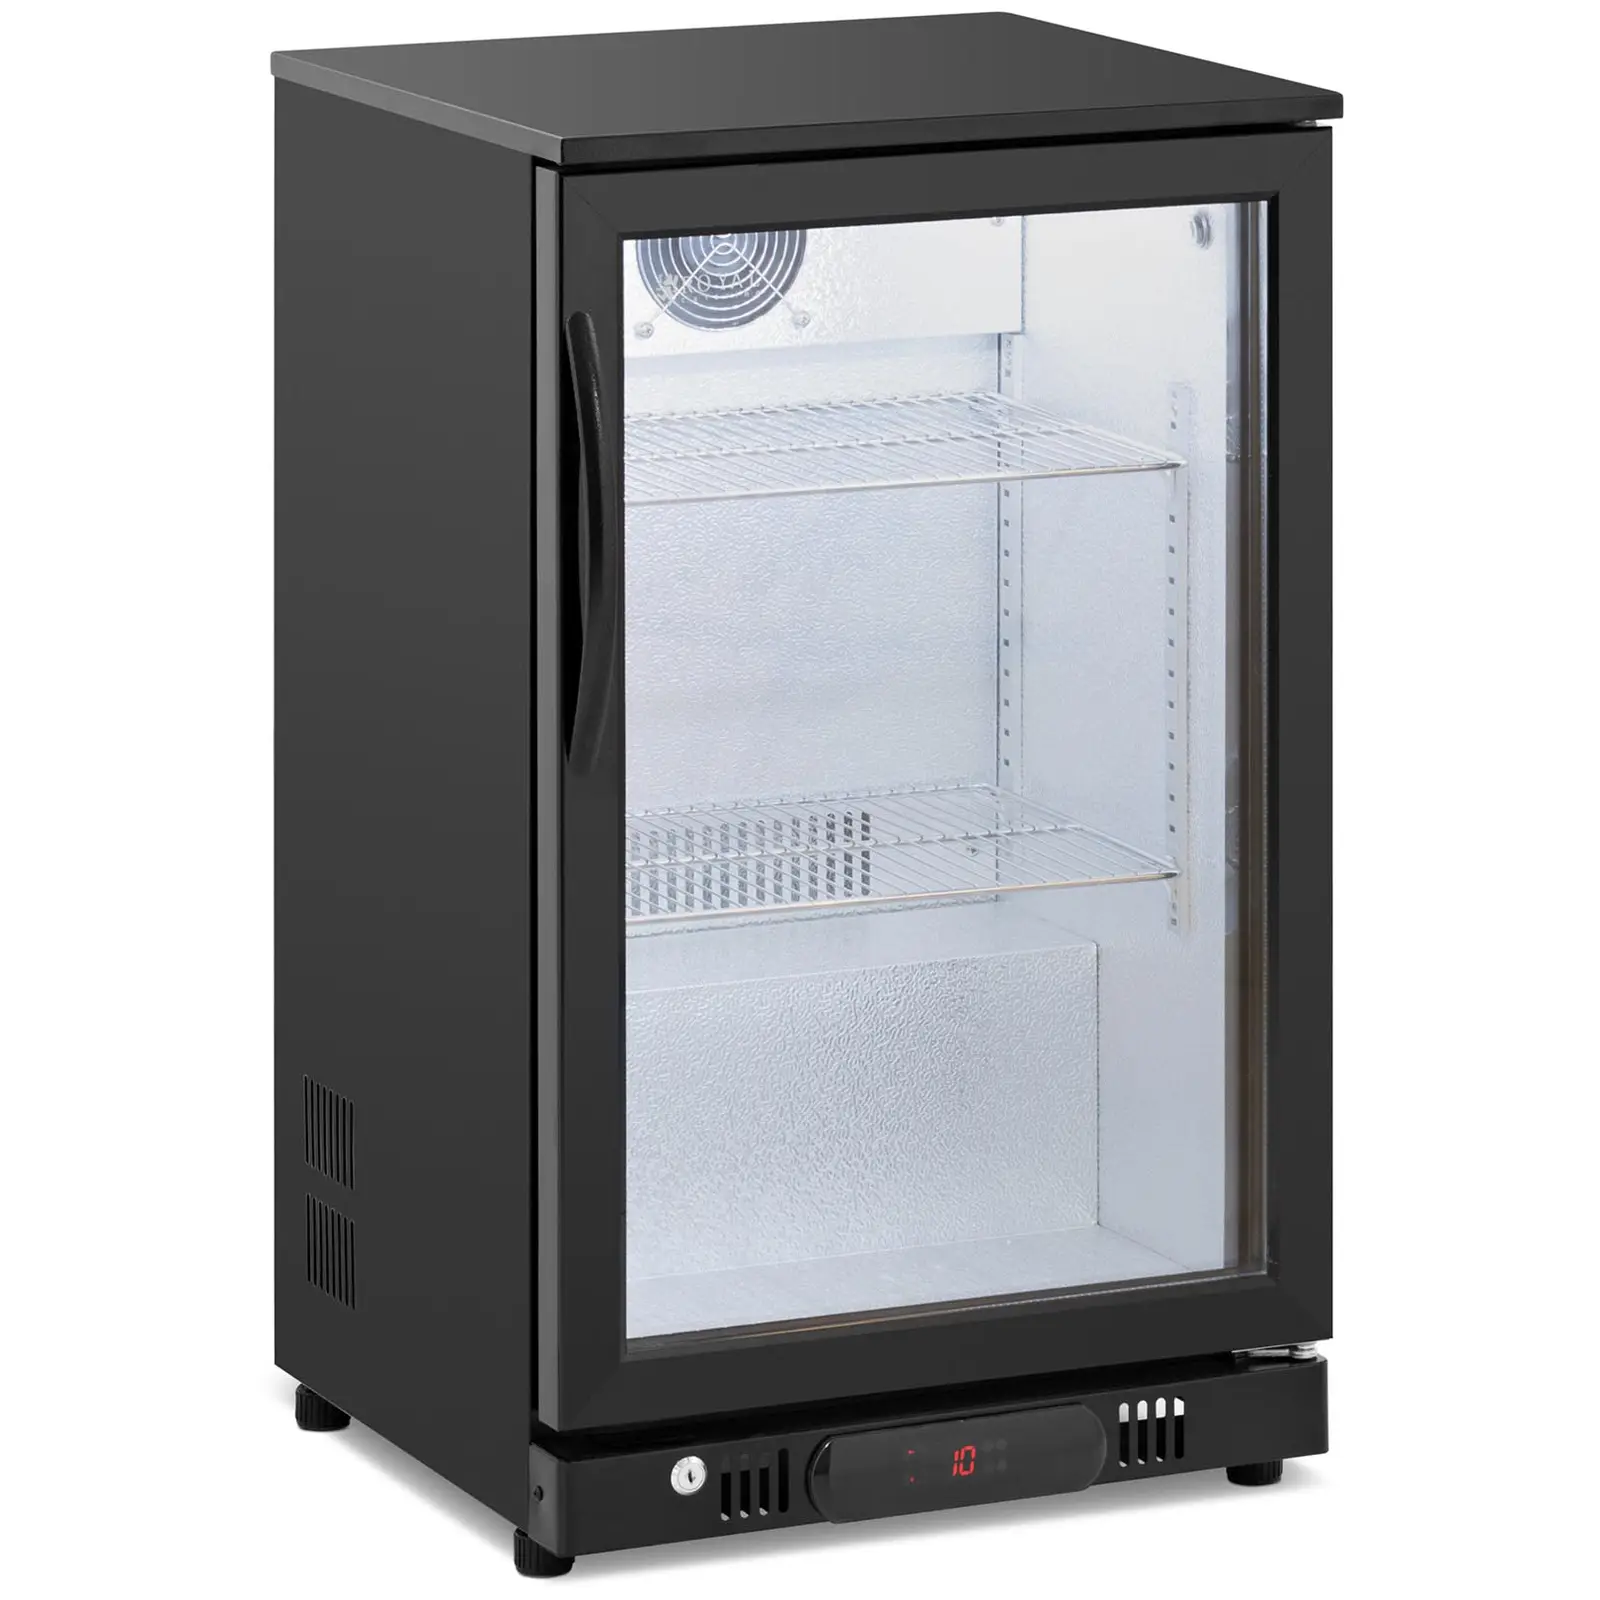 Arca refrigeradora - 108 l - 2-10°C - Royal Catering - preto